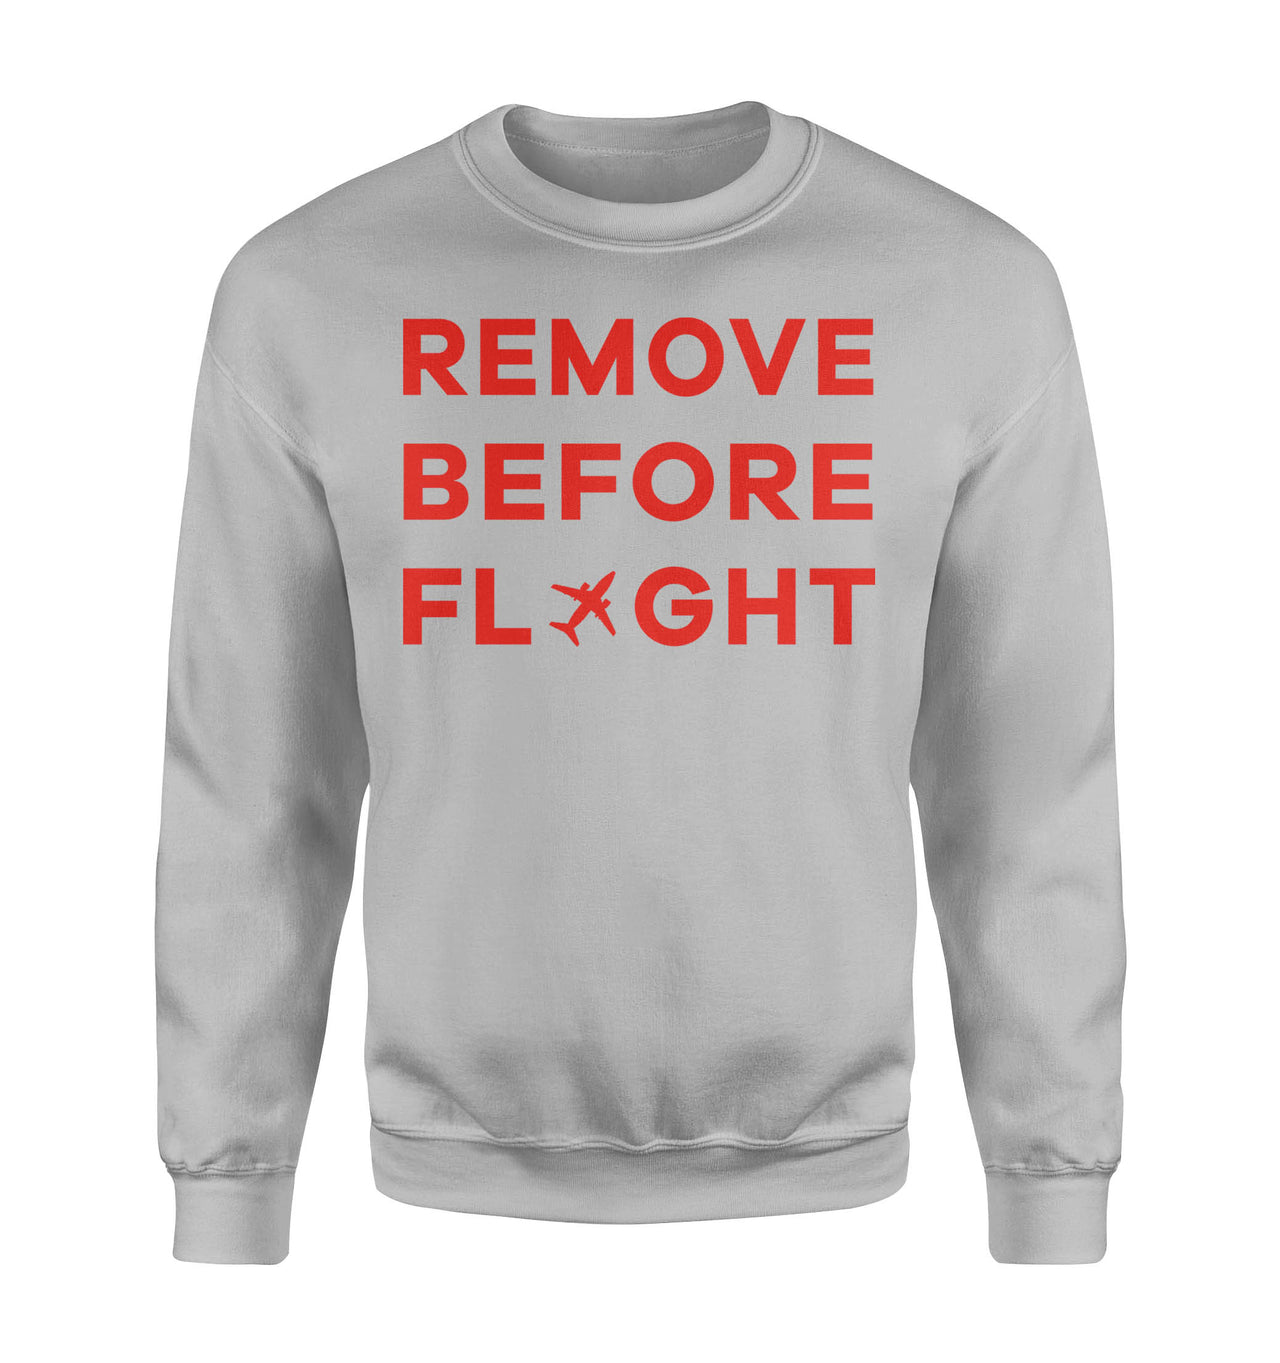 Remove Before Flight Designed Sweatshirts